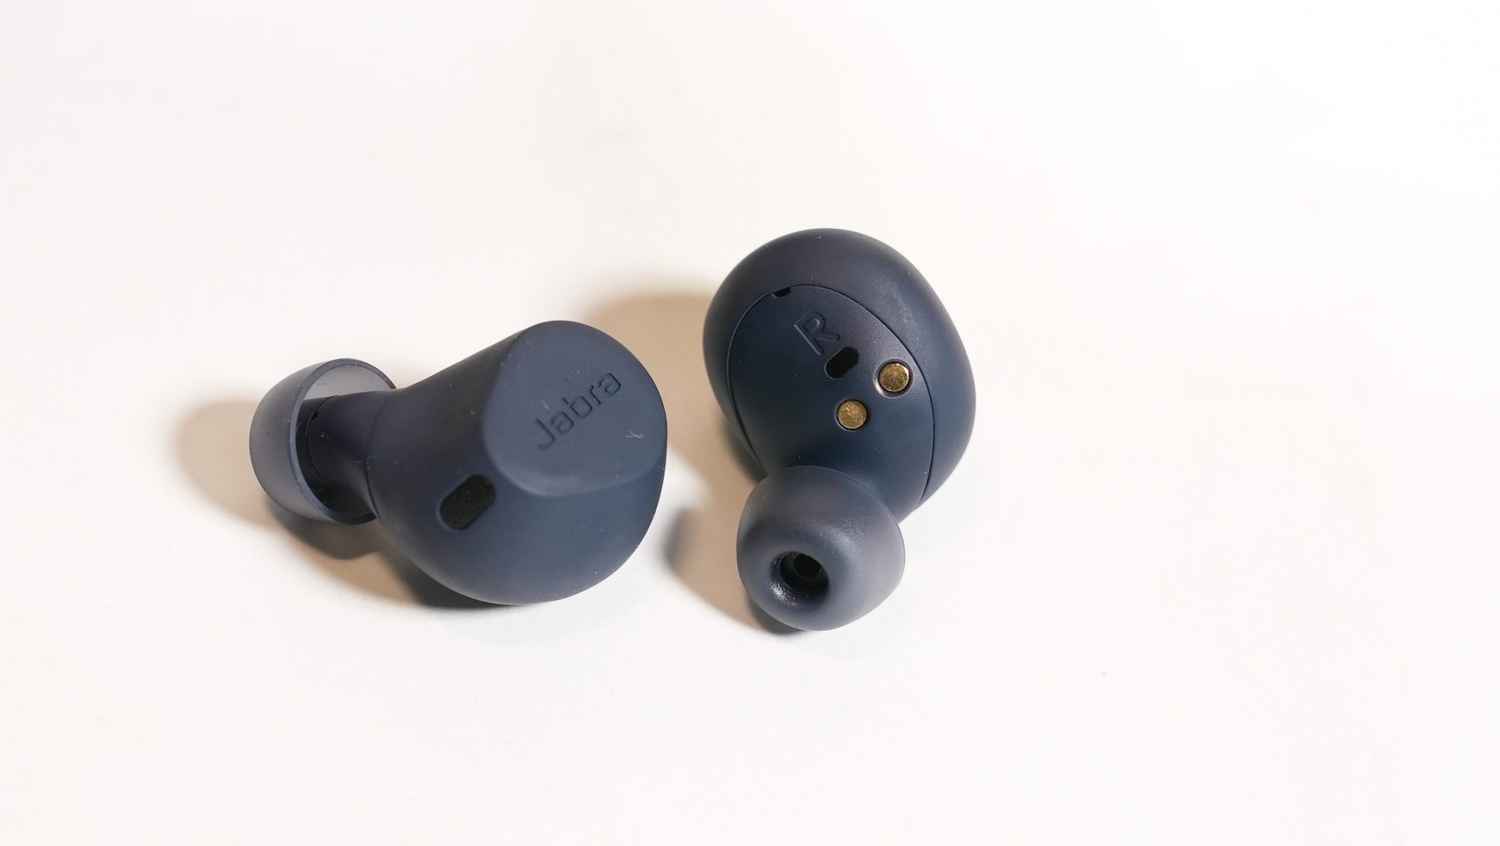 Jabra Elite 8 Active Review: The most not killed headphones